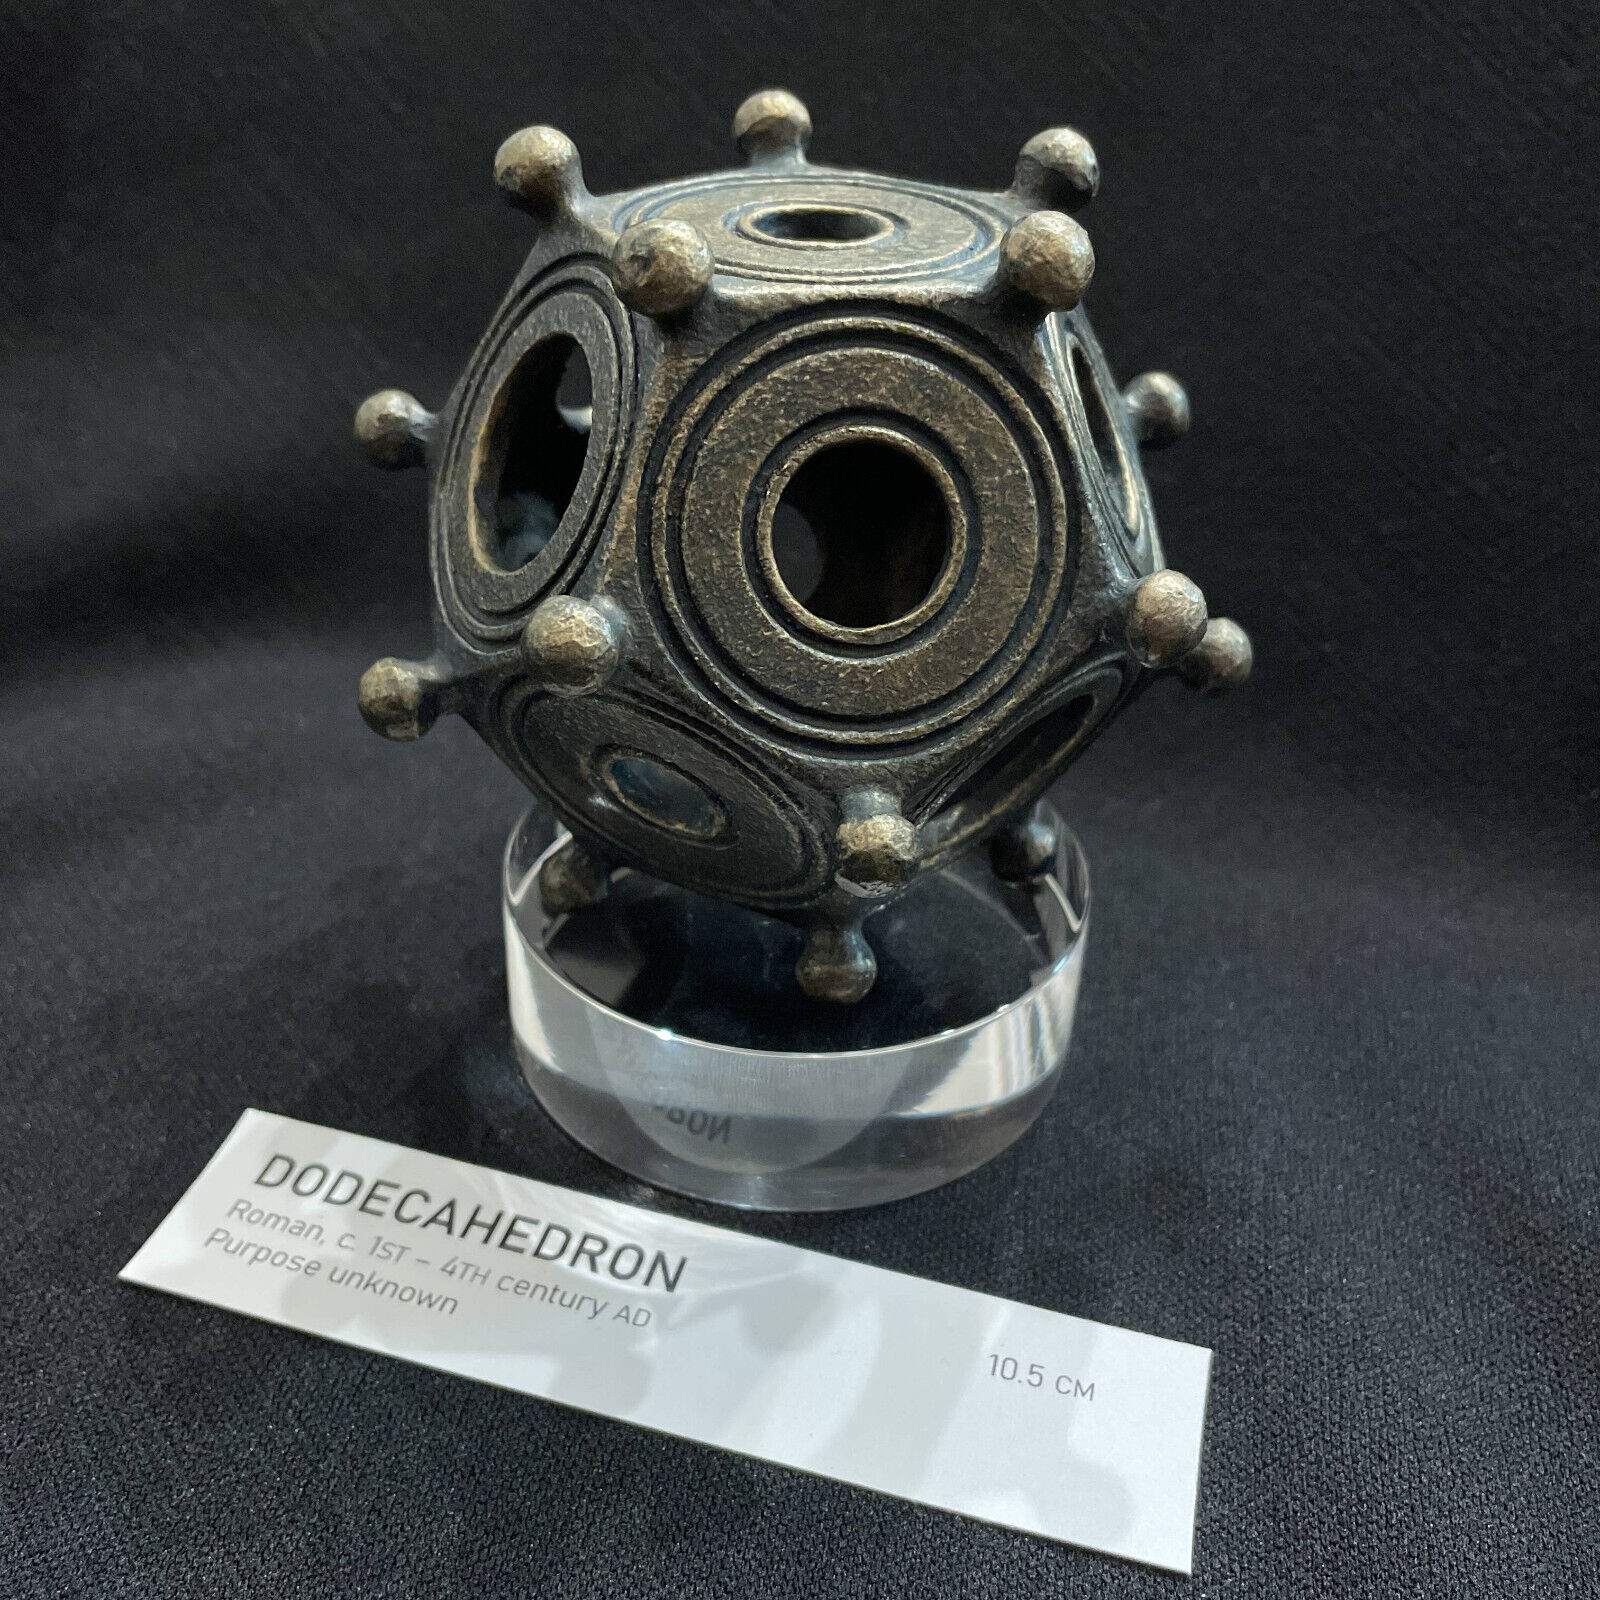 Roman dodecahedron - 10.5 cm - museum-grade replica, exact dimensions